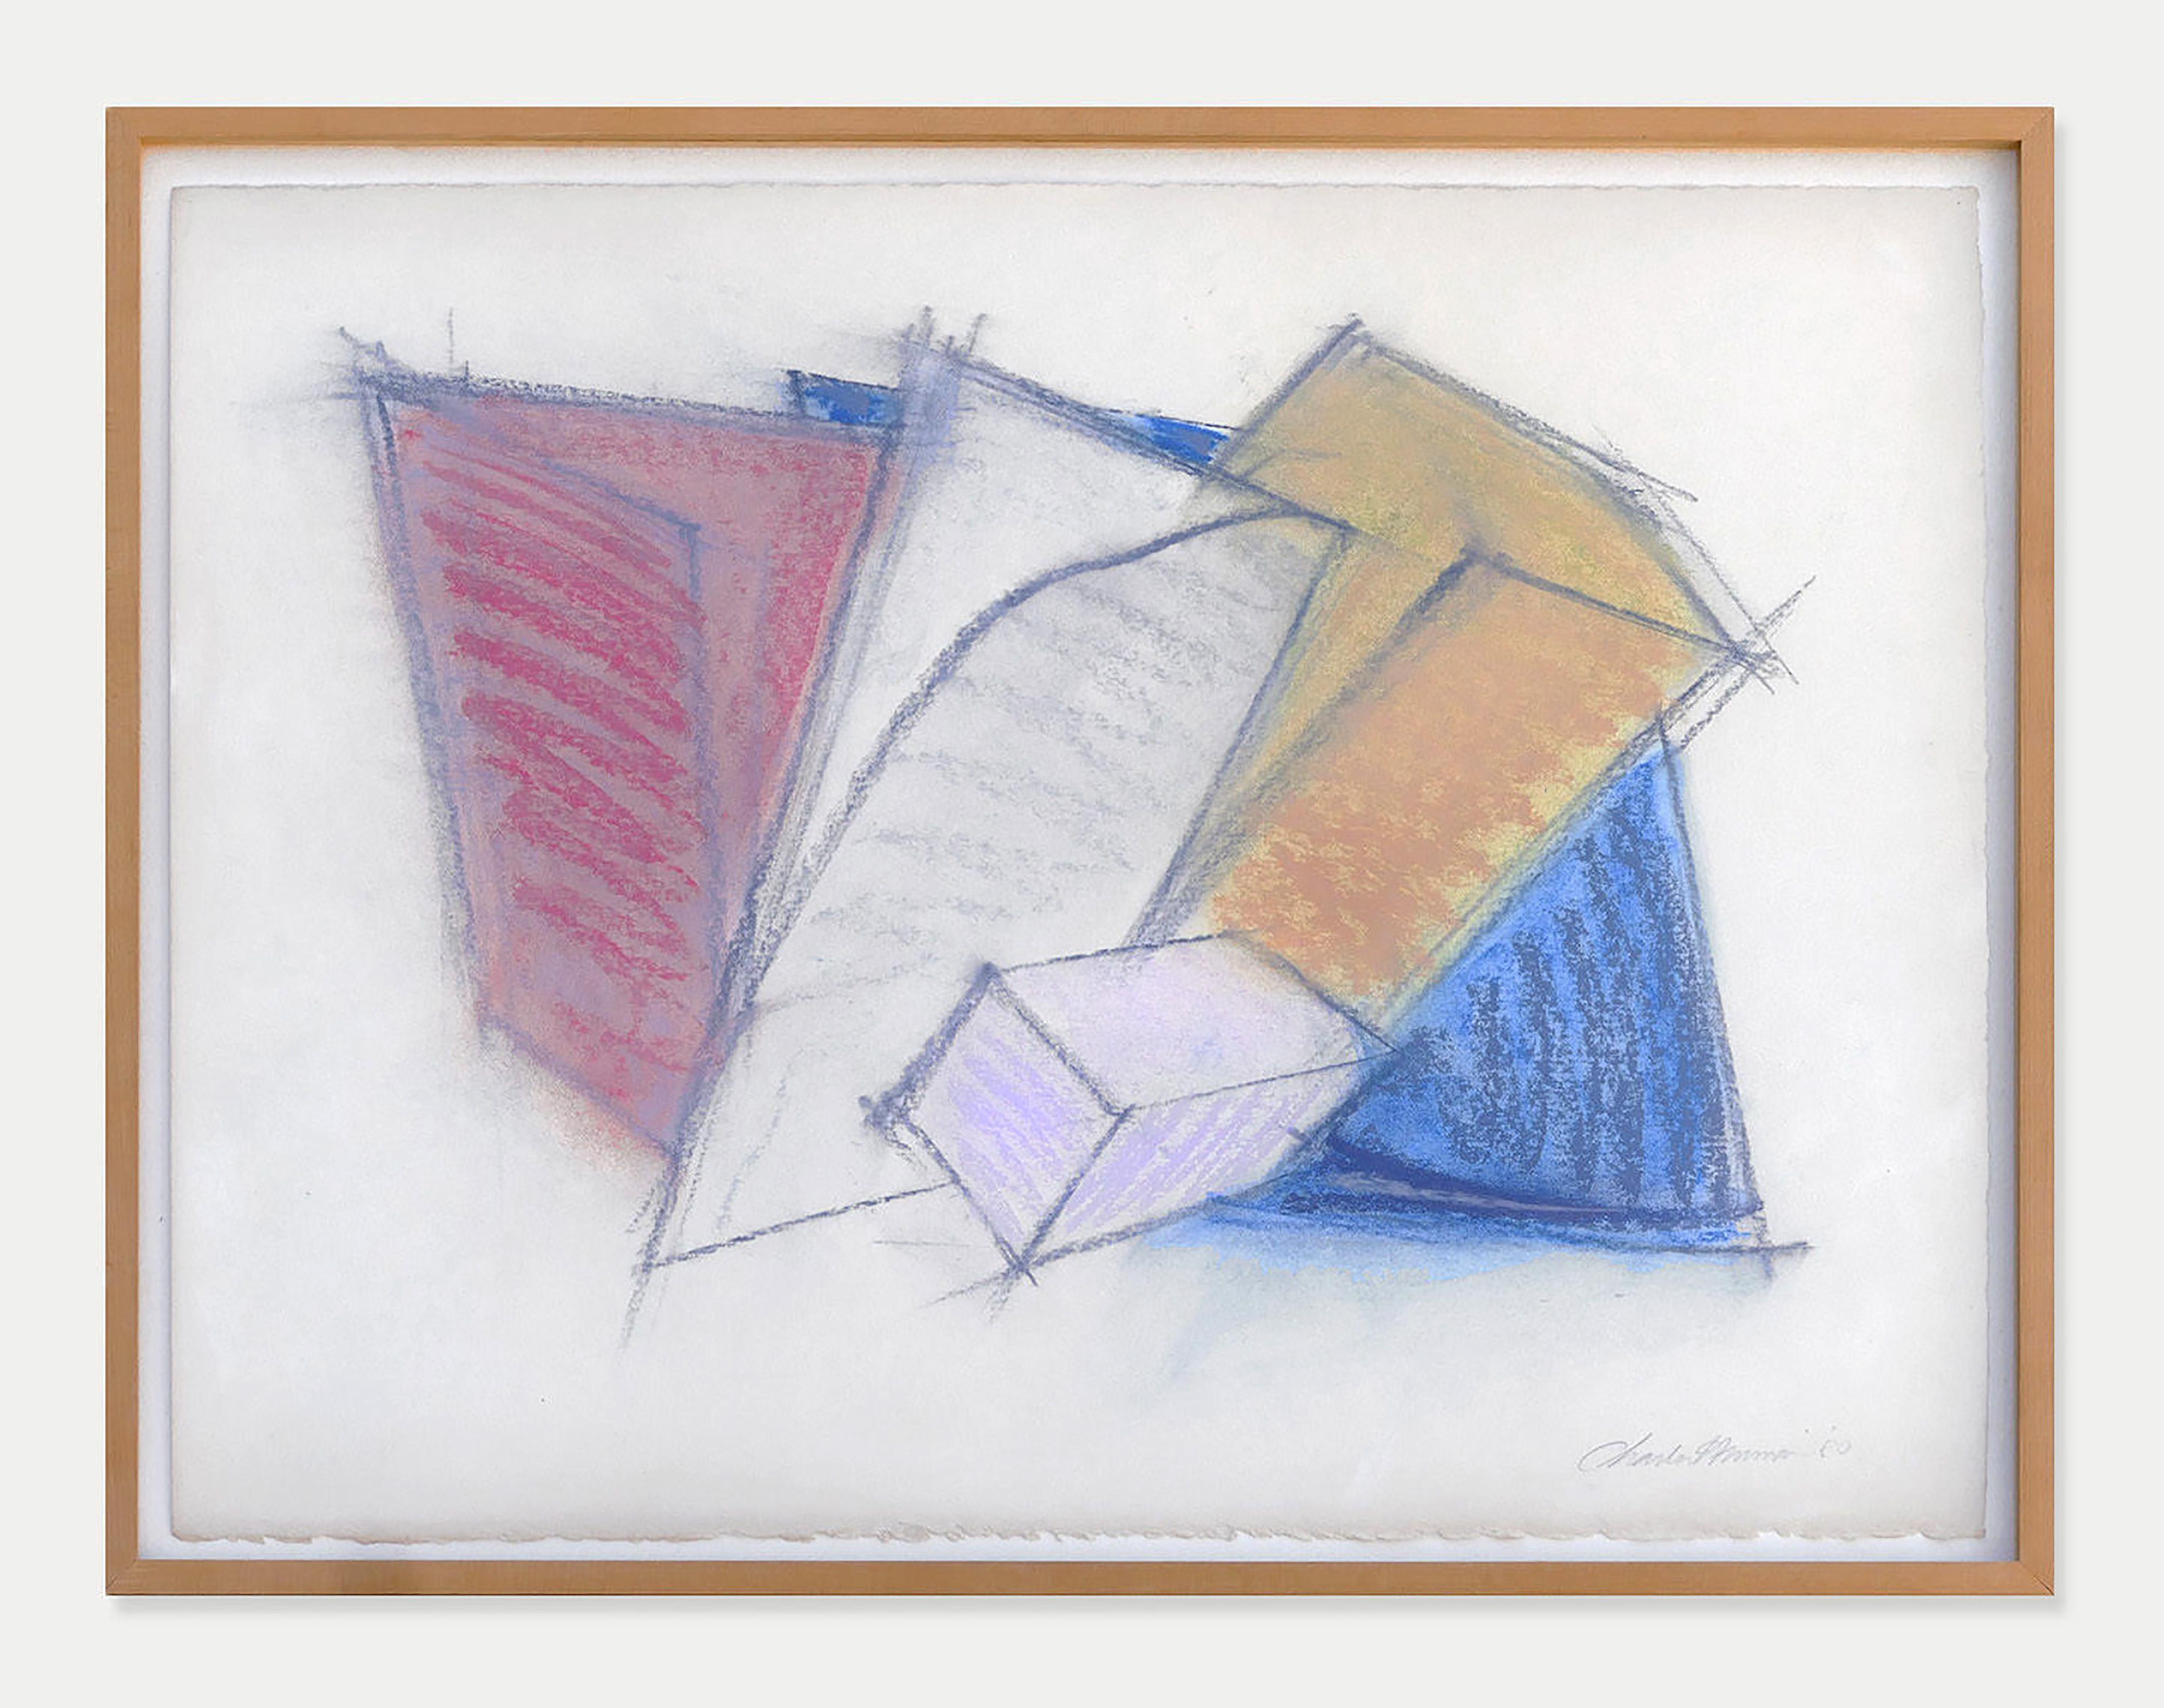 Abstract Drawing Charles Hinman - Untitled Drawing Minimalist (Abstraction géométrique moderne du milieu du siècle dernier)